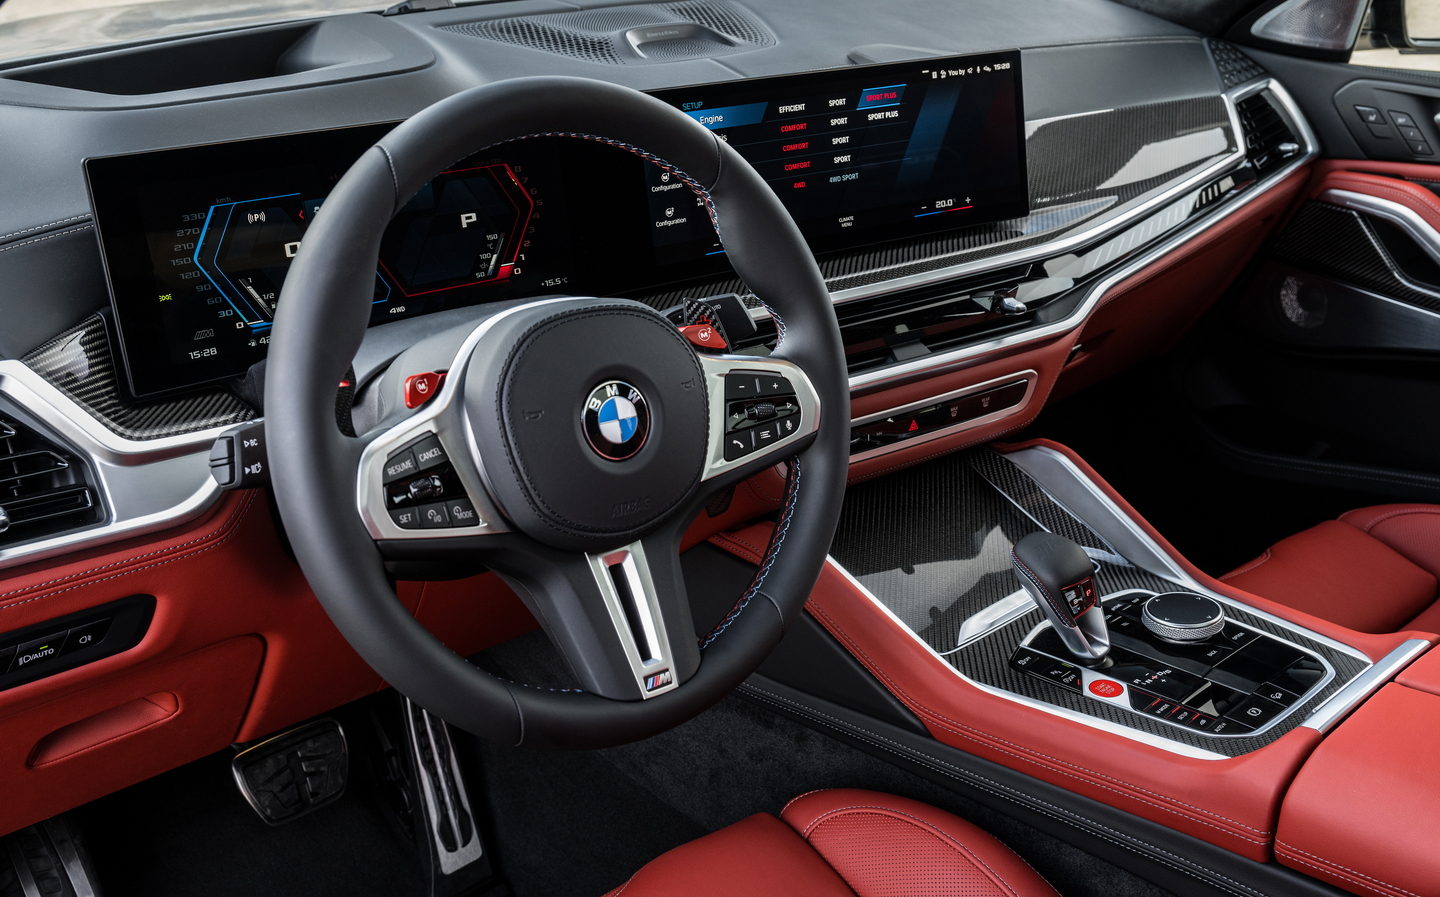 BMW X6 M interior